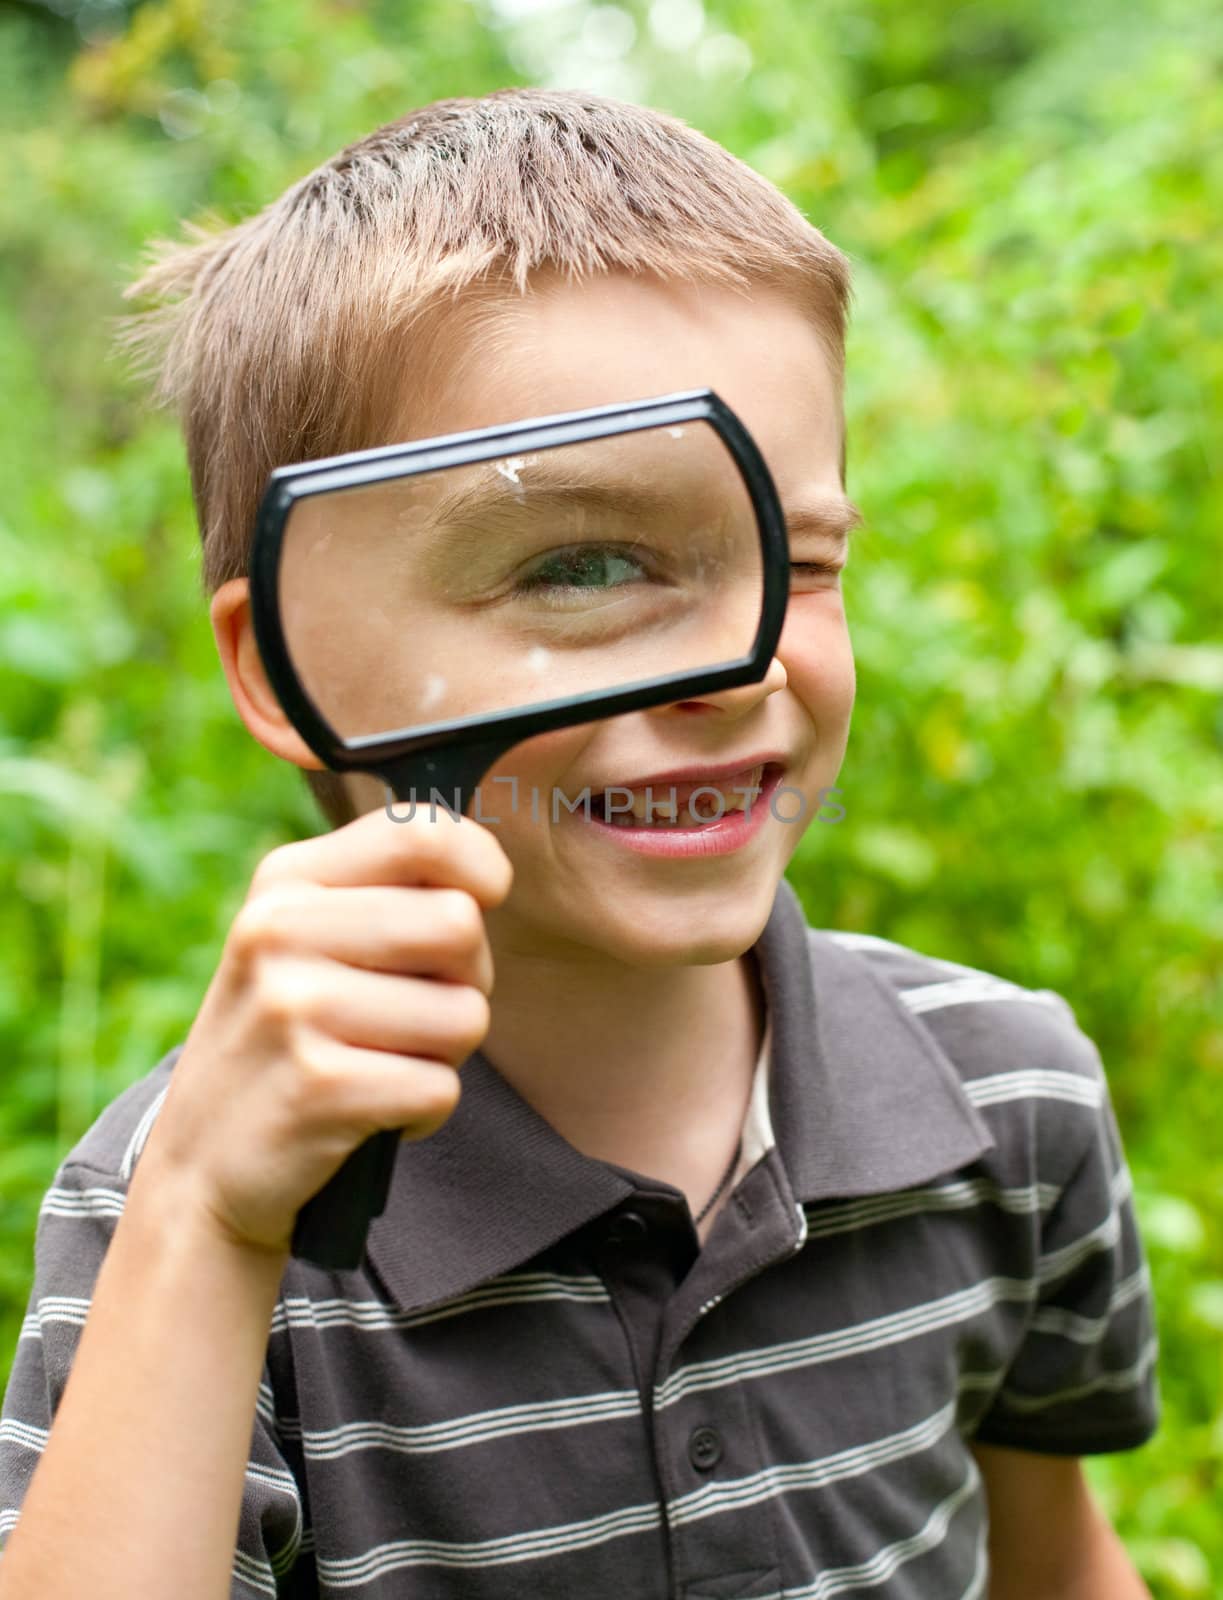 Cheerful boy looking through hand magnifier, shallow DOF